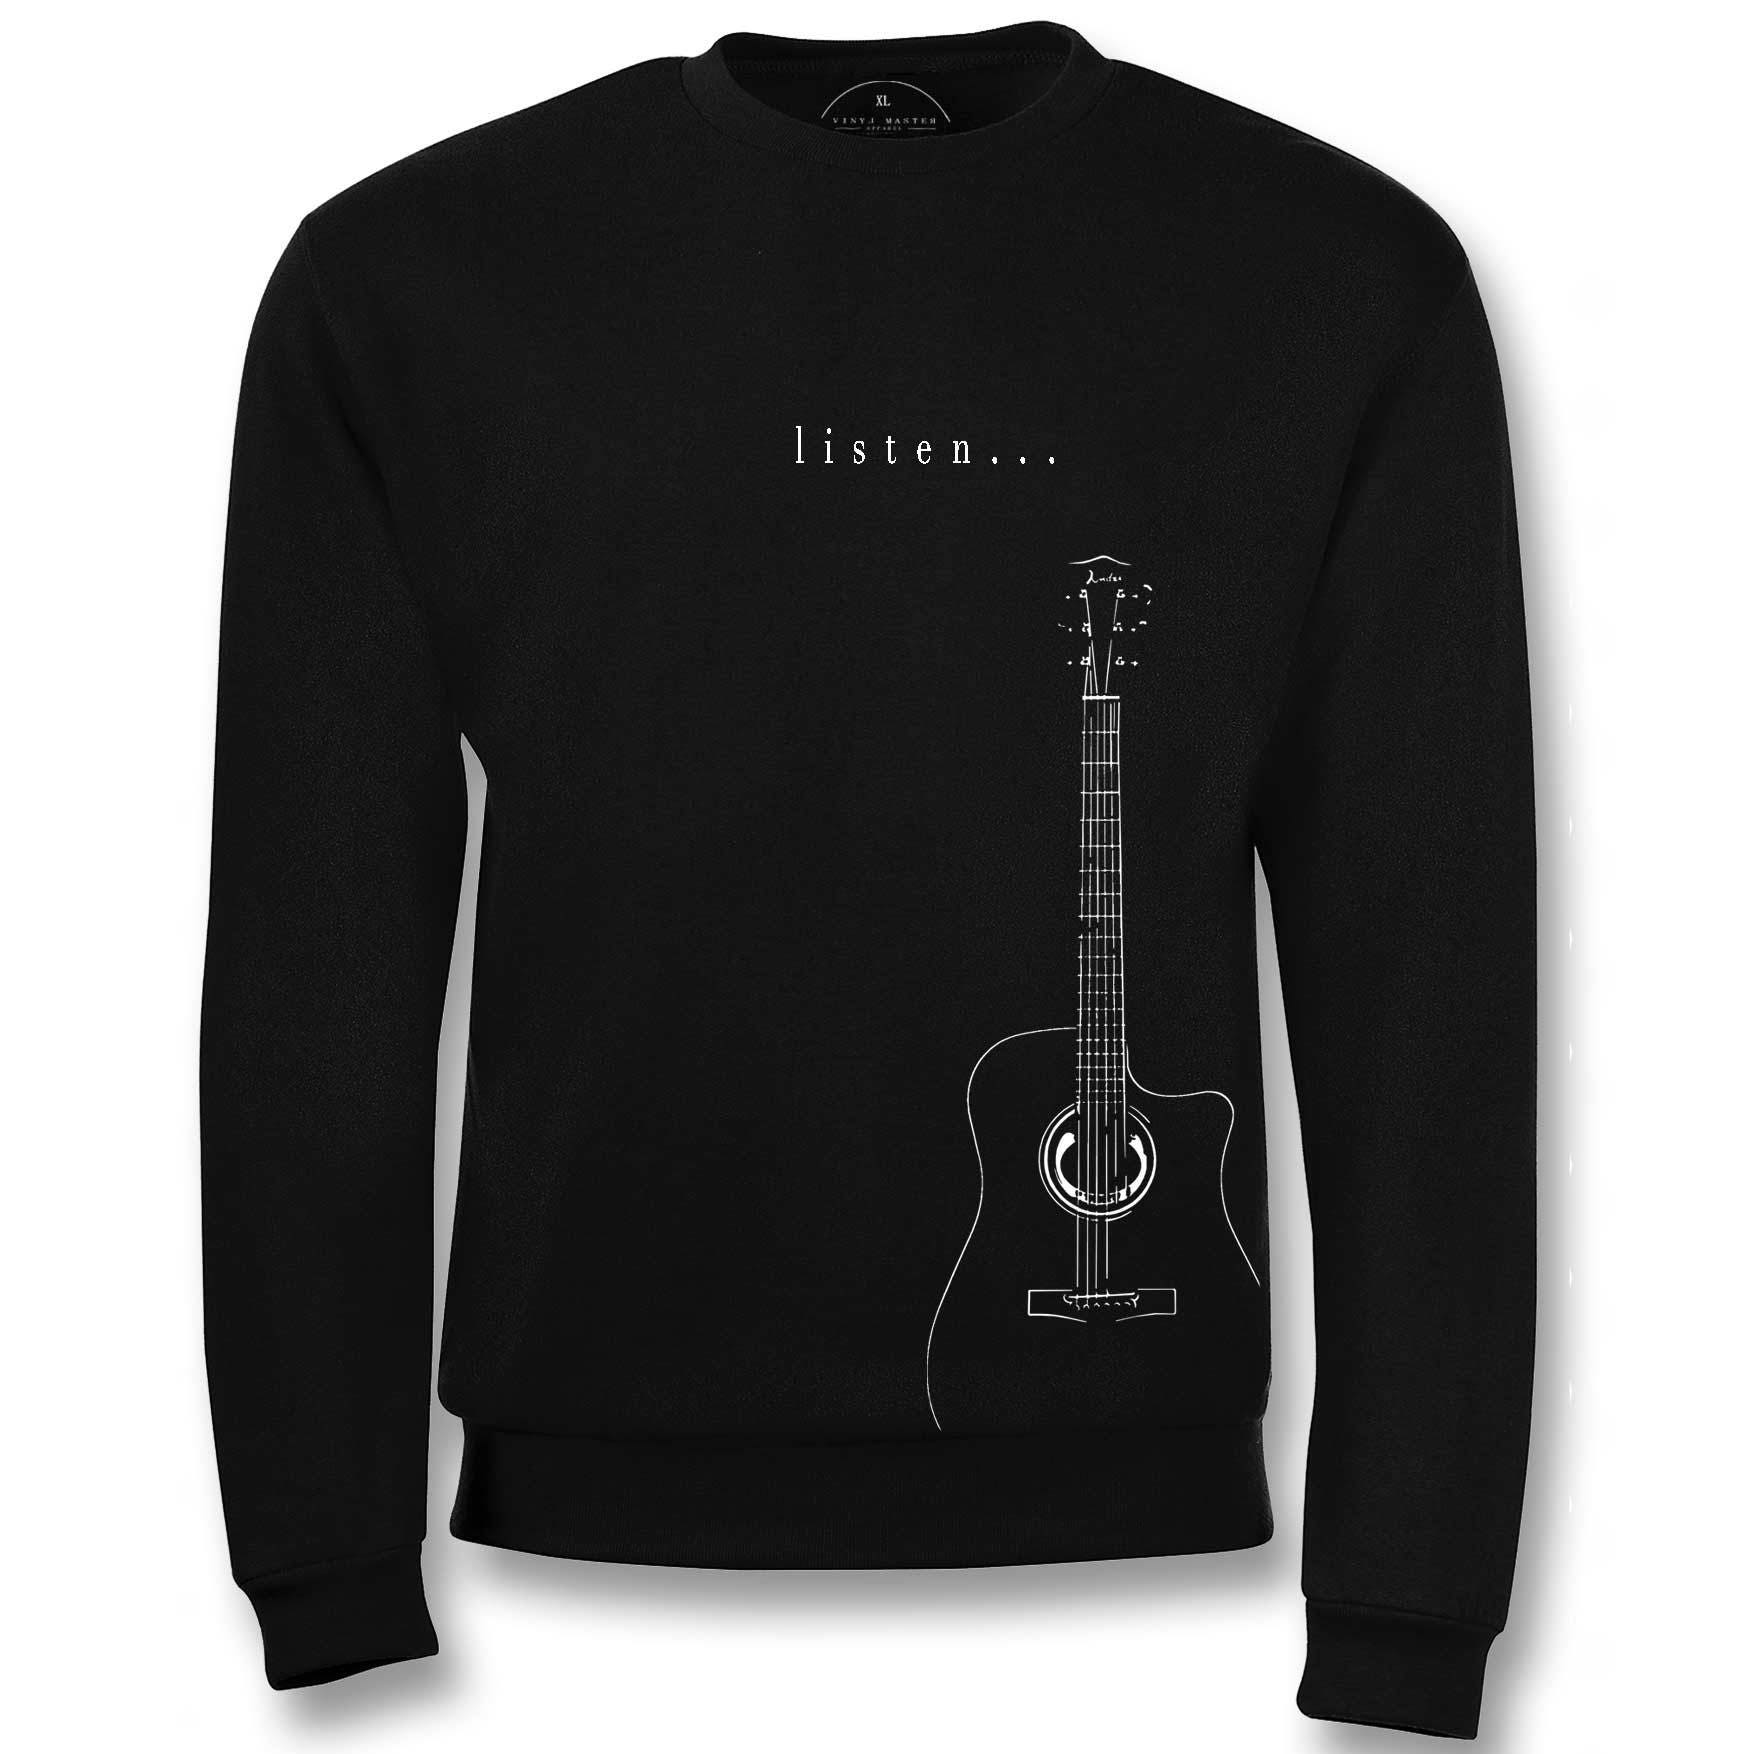 Camiseta icónica de algodón orgánico de Guitarras regalos para guitarristas camiseta de guitarra Ropa Ropa para hombre Camisas y camisetas Camisetas camisetas para hombres Regalo del Día del Padre regalos para él 